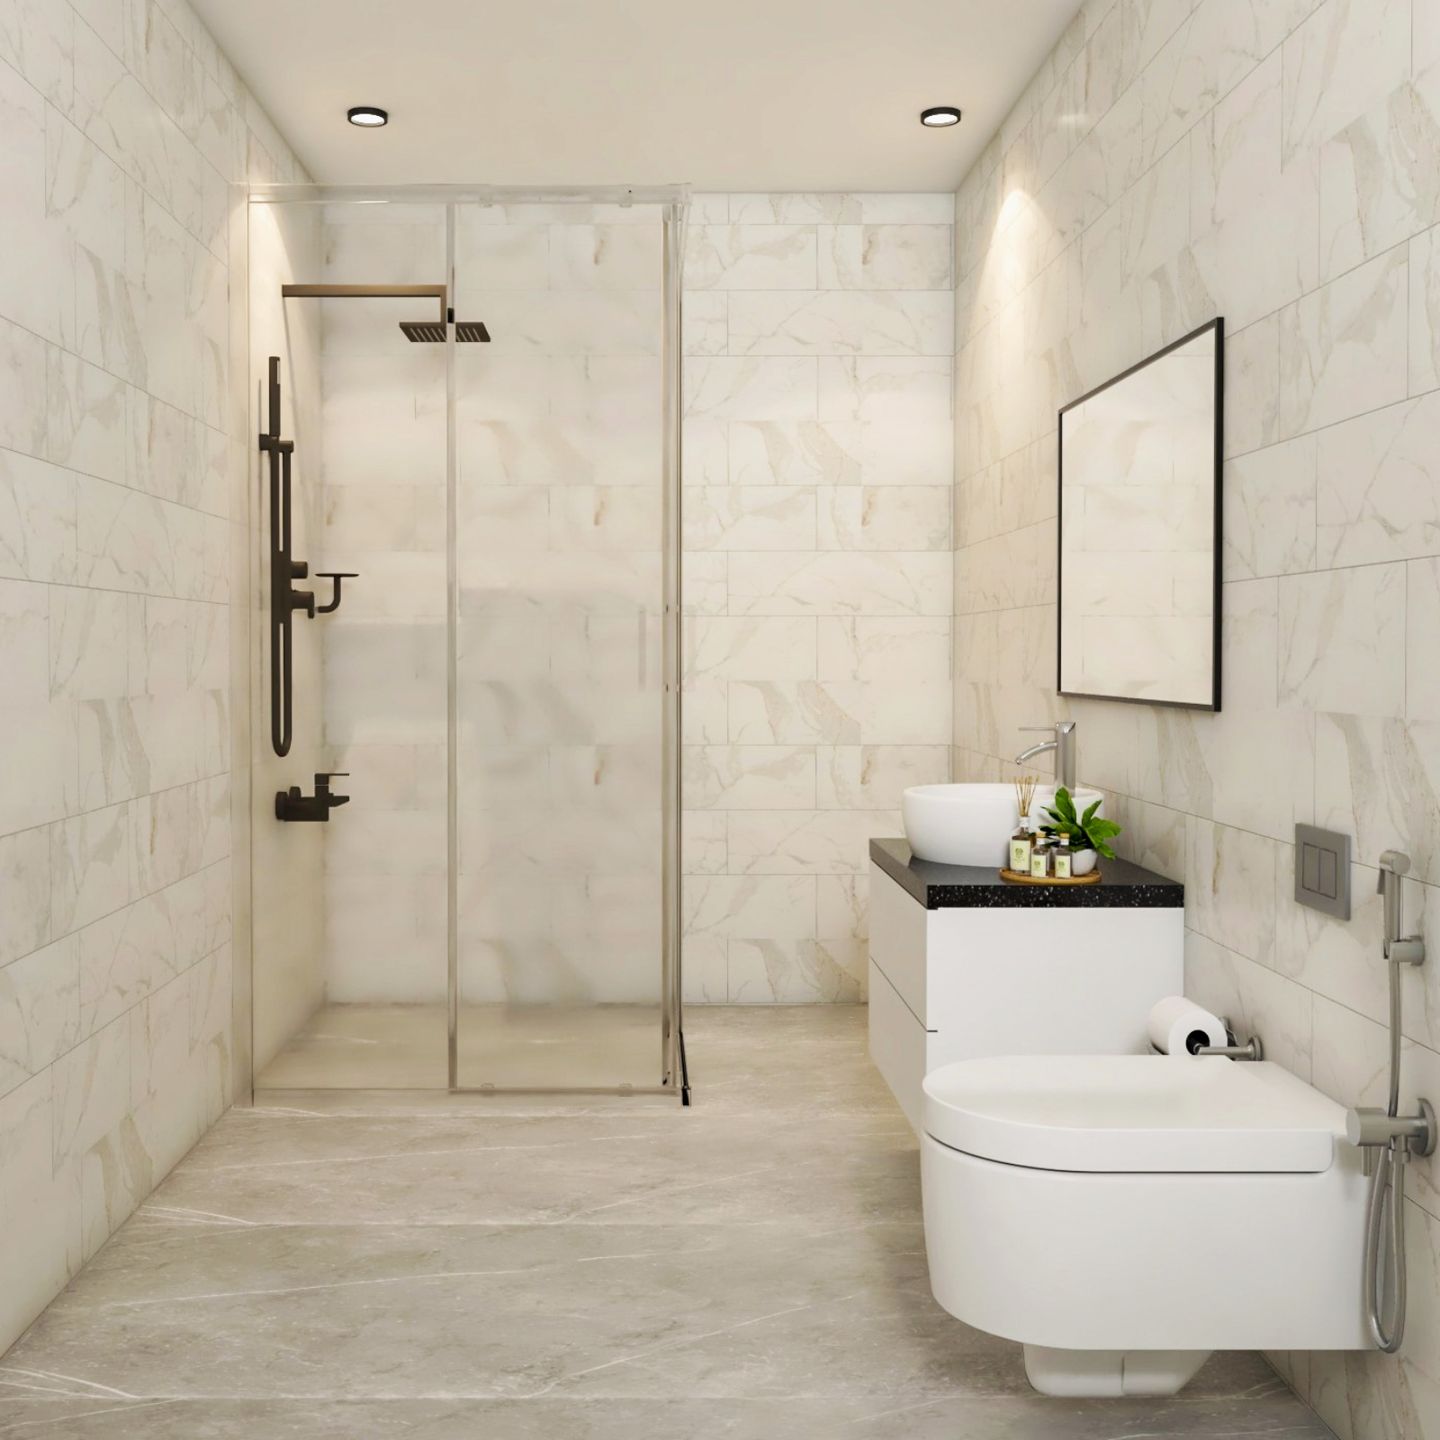 Cream And Grey Bathroom Design With Square Mirror - Livspace